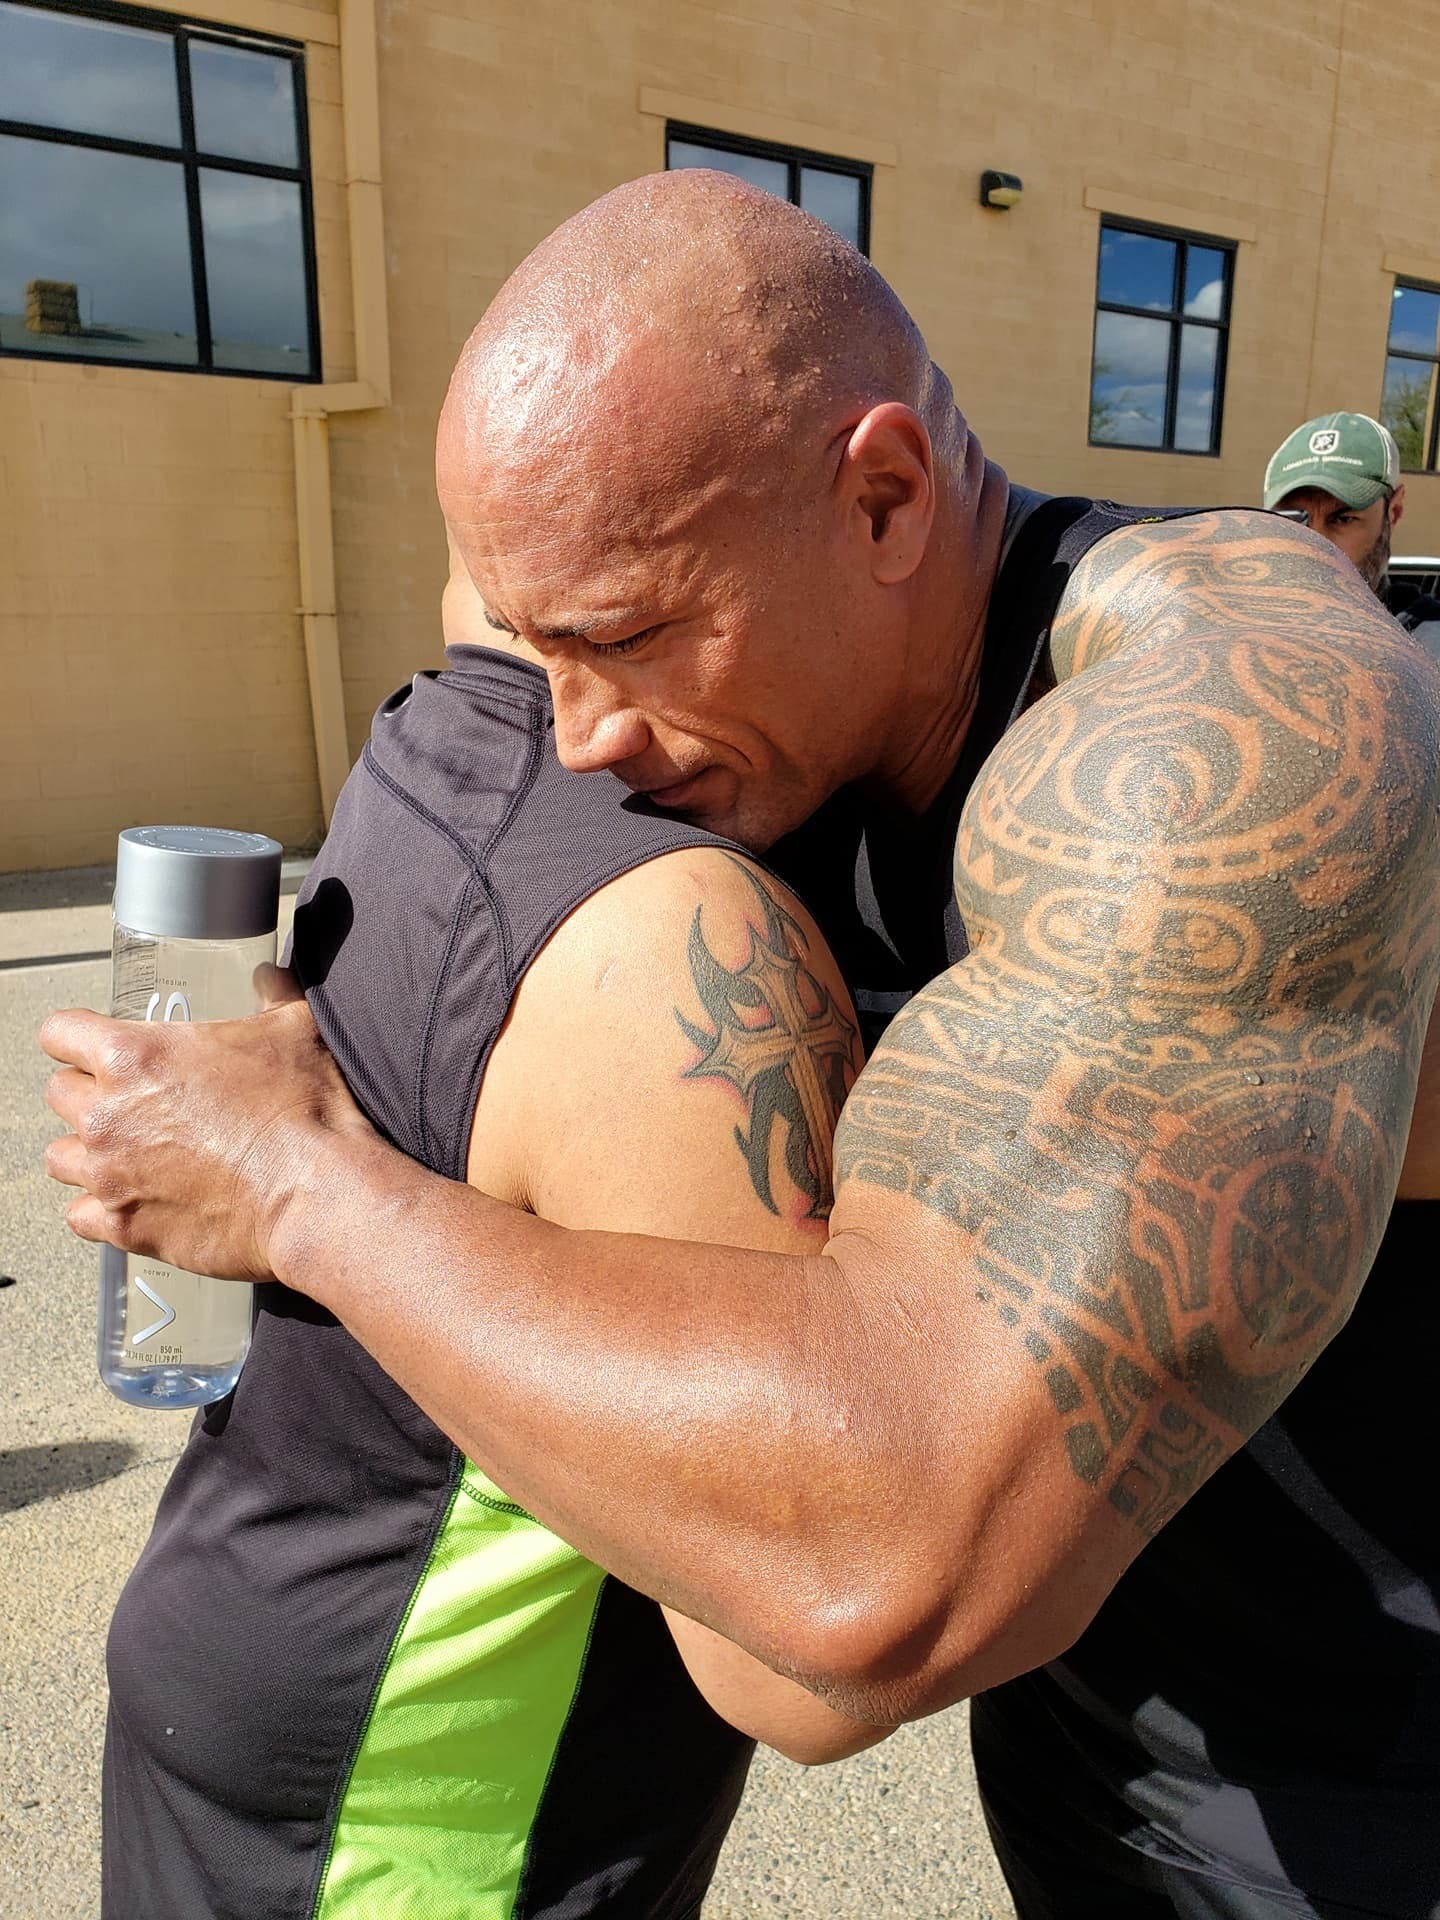 Actor Dwayne "The Rock" Johnson hugs Farmington resident Leonard Castillo on April 26 in Farmington.